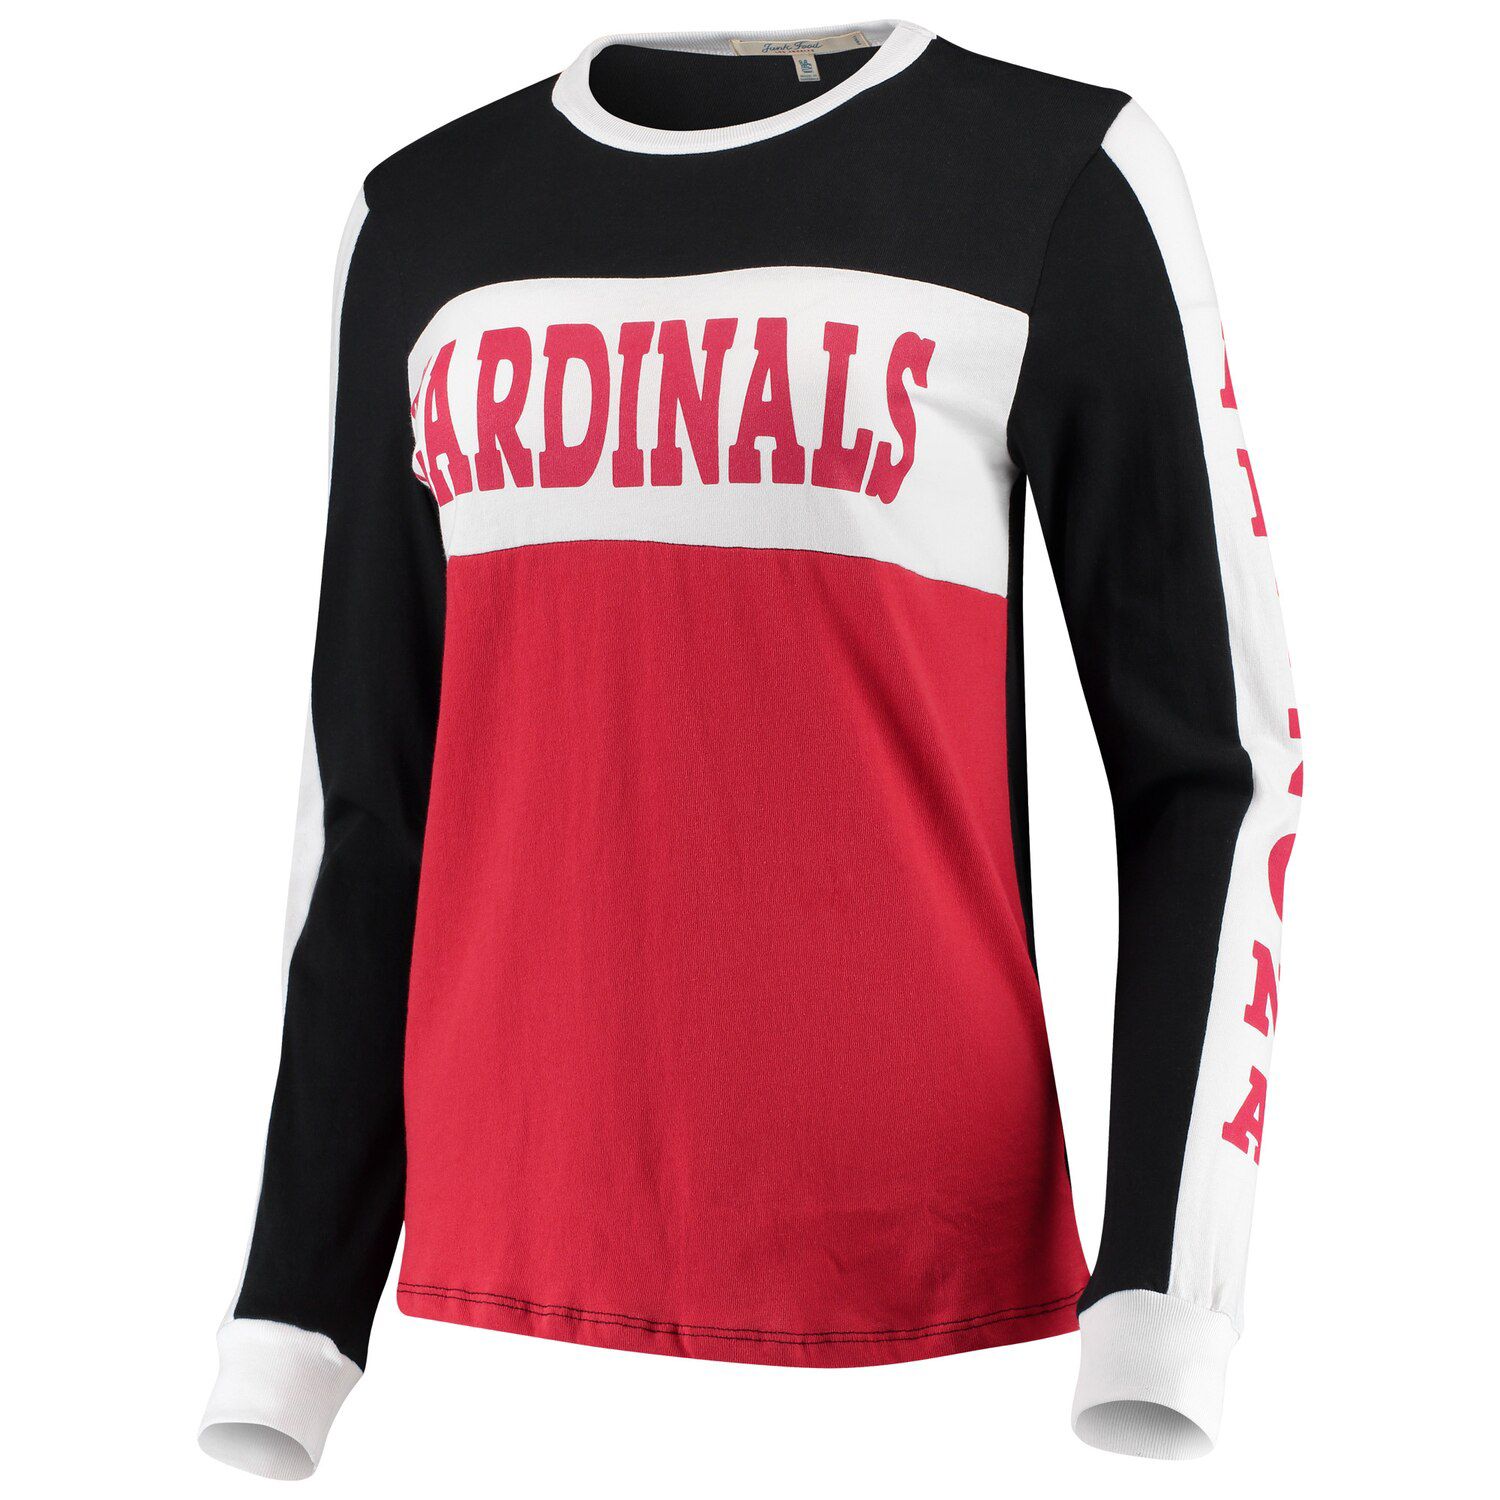 arizona cardinals black womens jersey